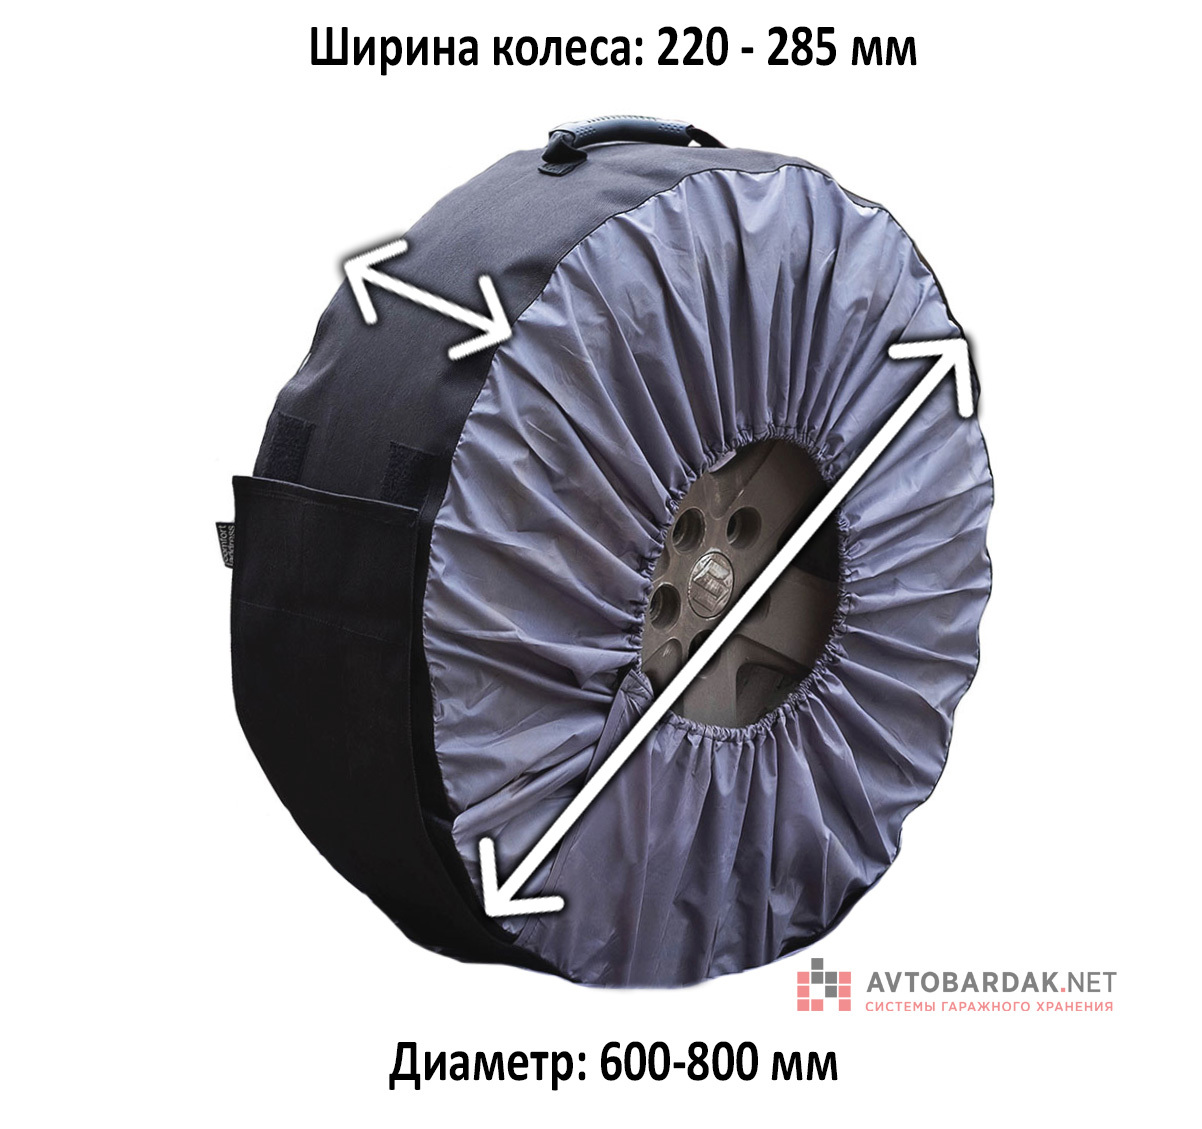 Чехлы для колес XL, стандарт (диаметр 600-800, ширина 220 - 285), 4 шт.